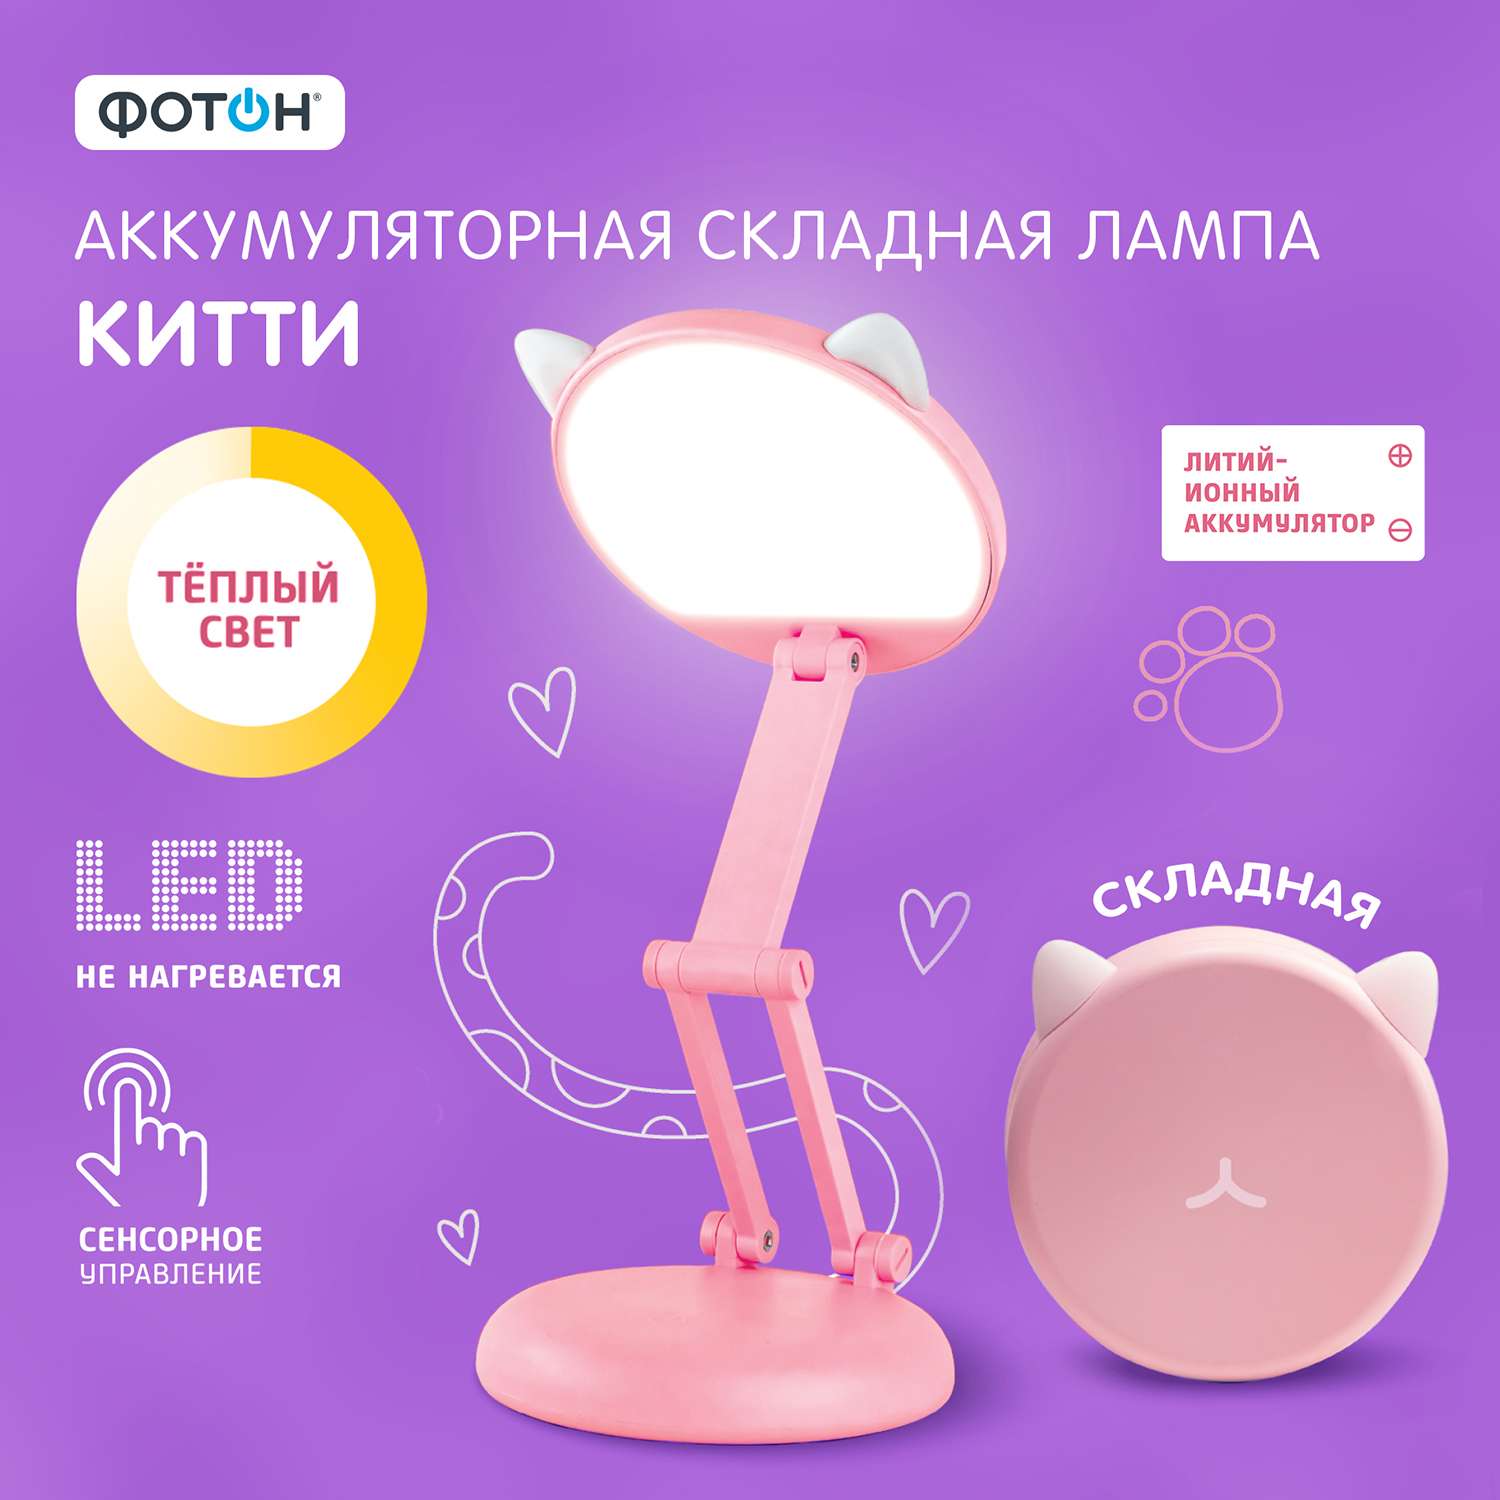 Настольная лампа ФОТОН складная аккумуляторная Китти розовая - фото 1